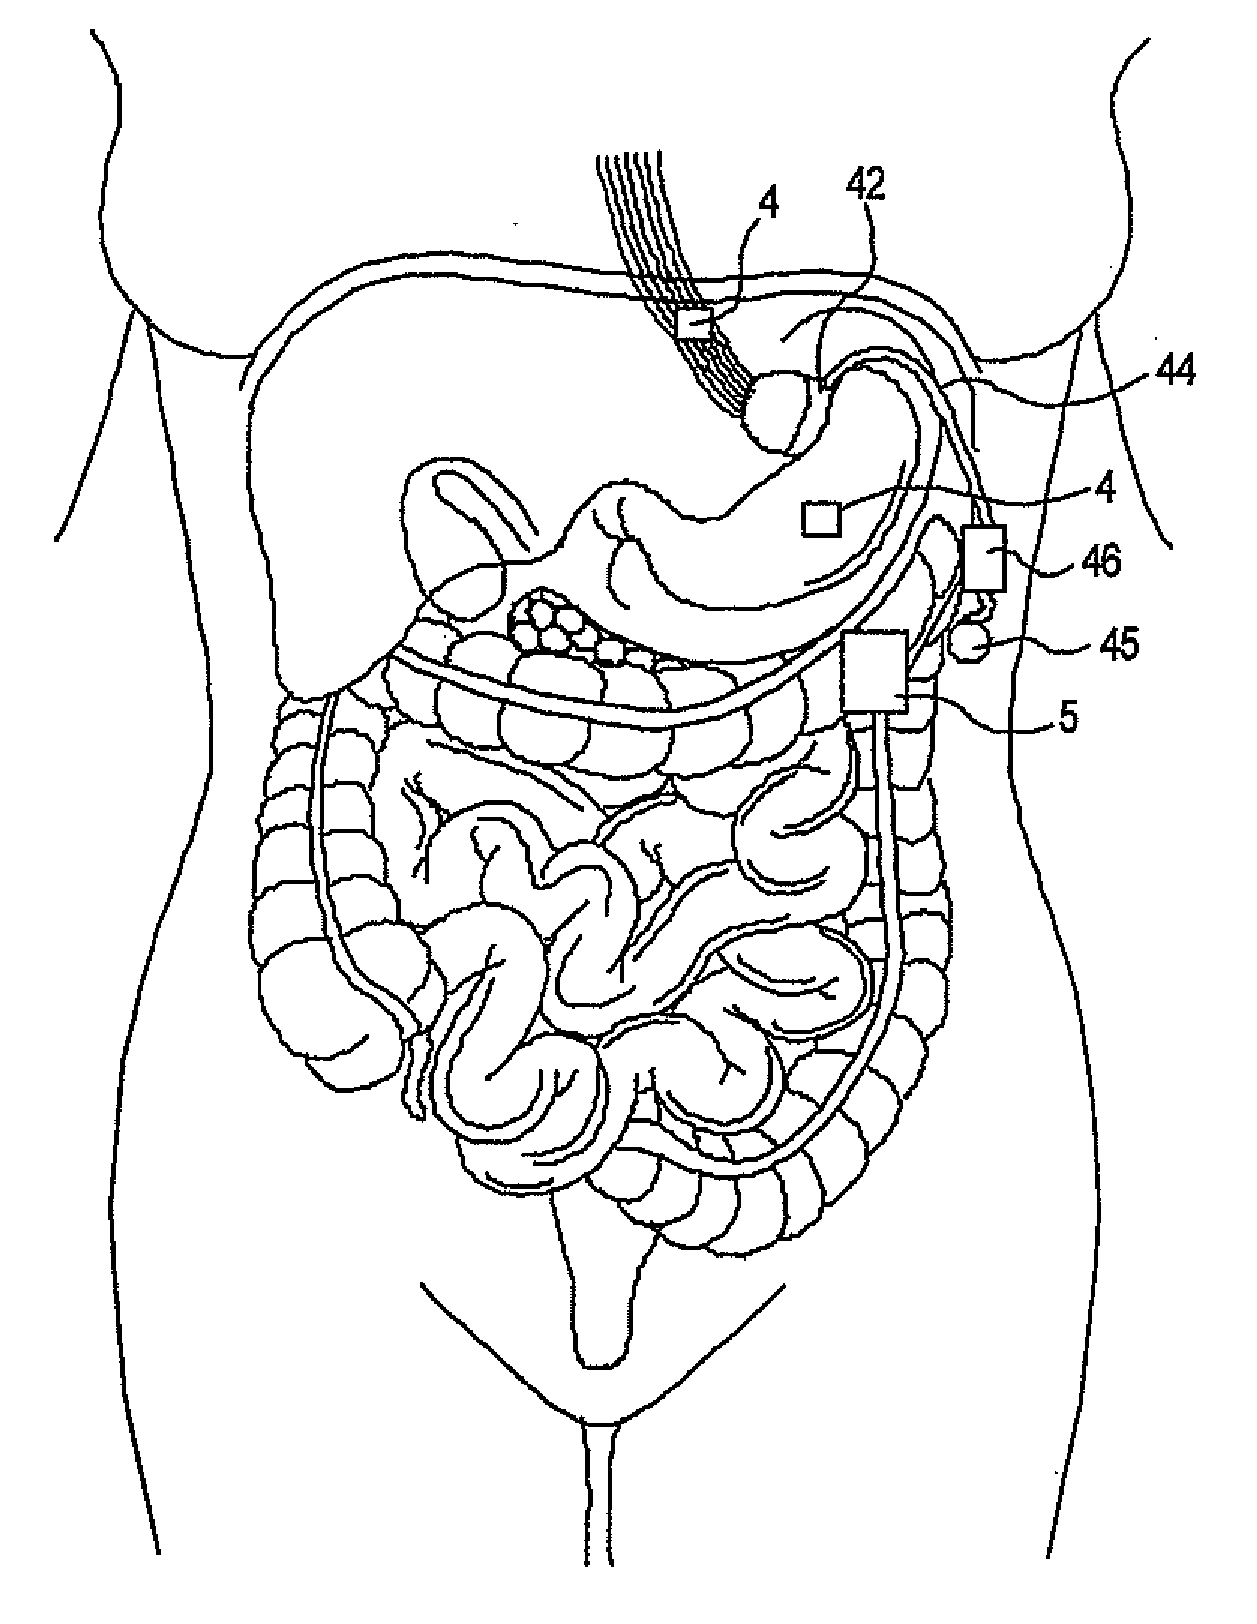 Artificial gastric valve